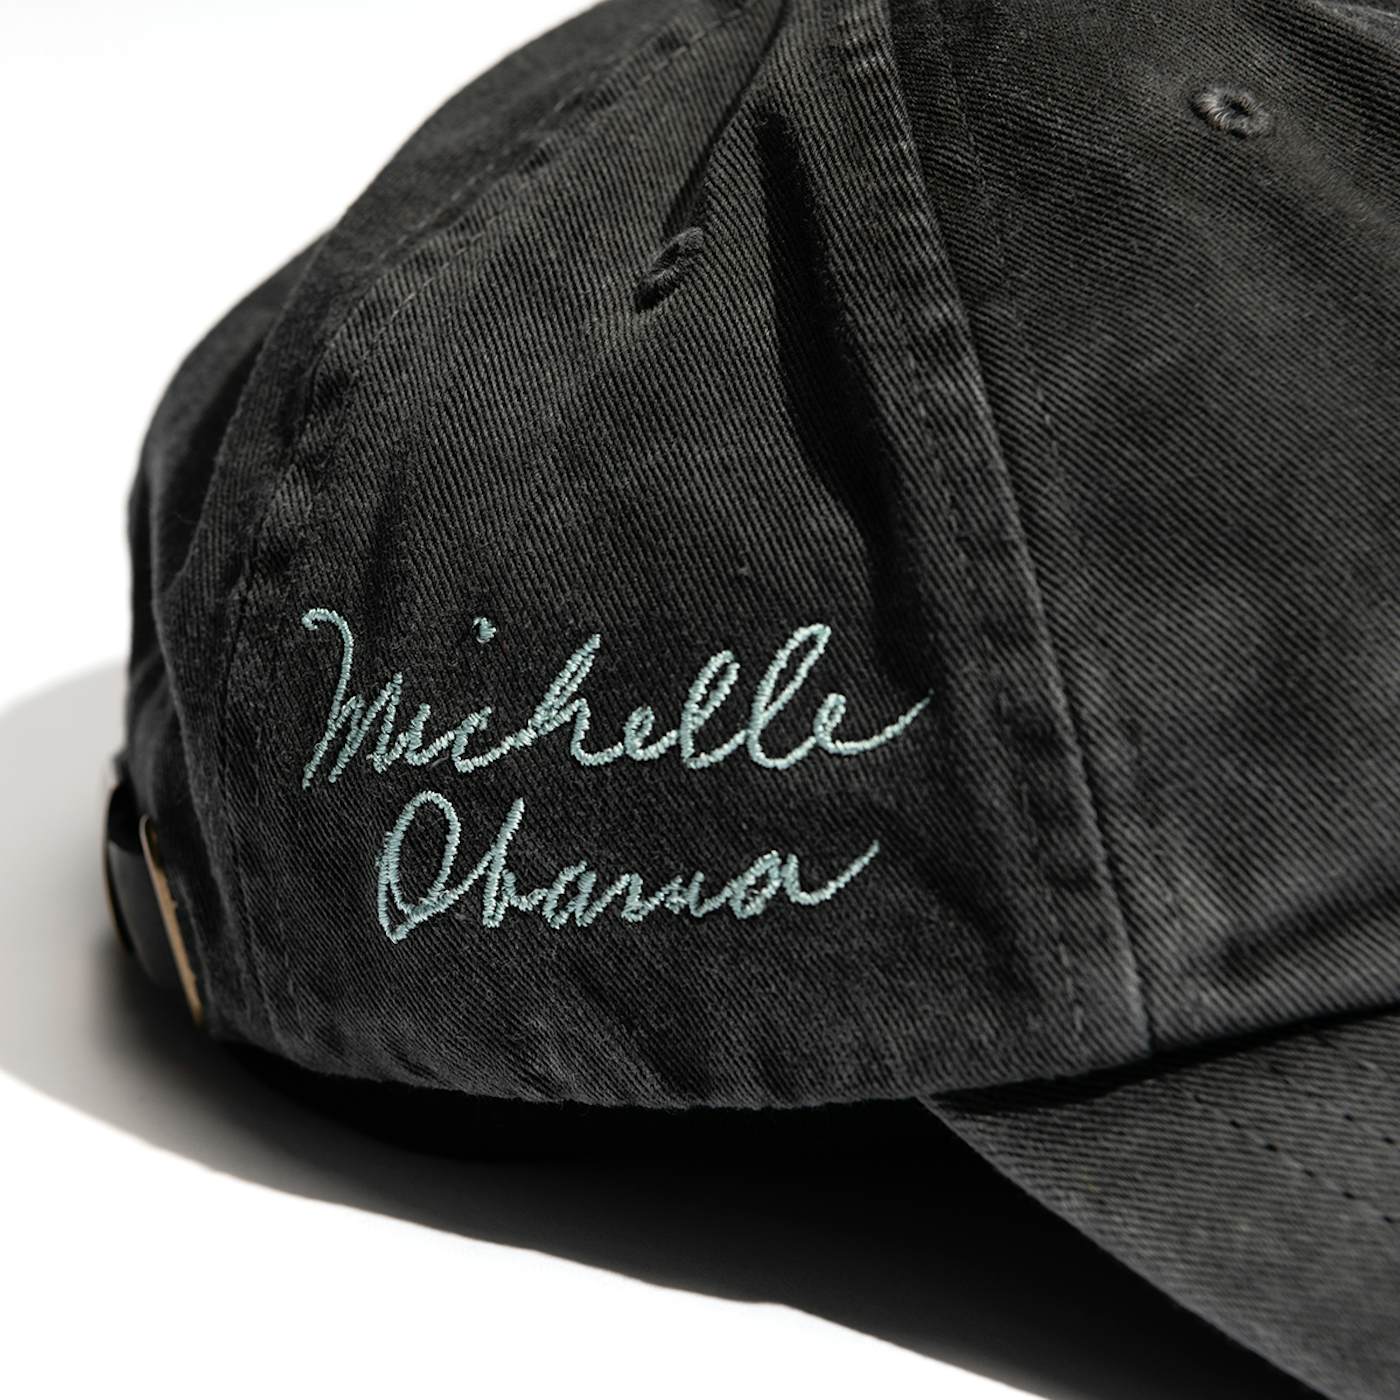 Michelle Obama Signature Grey Hat